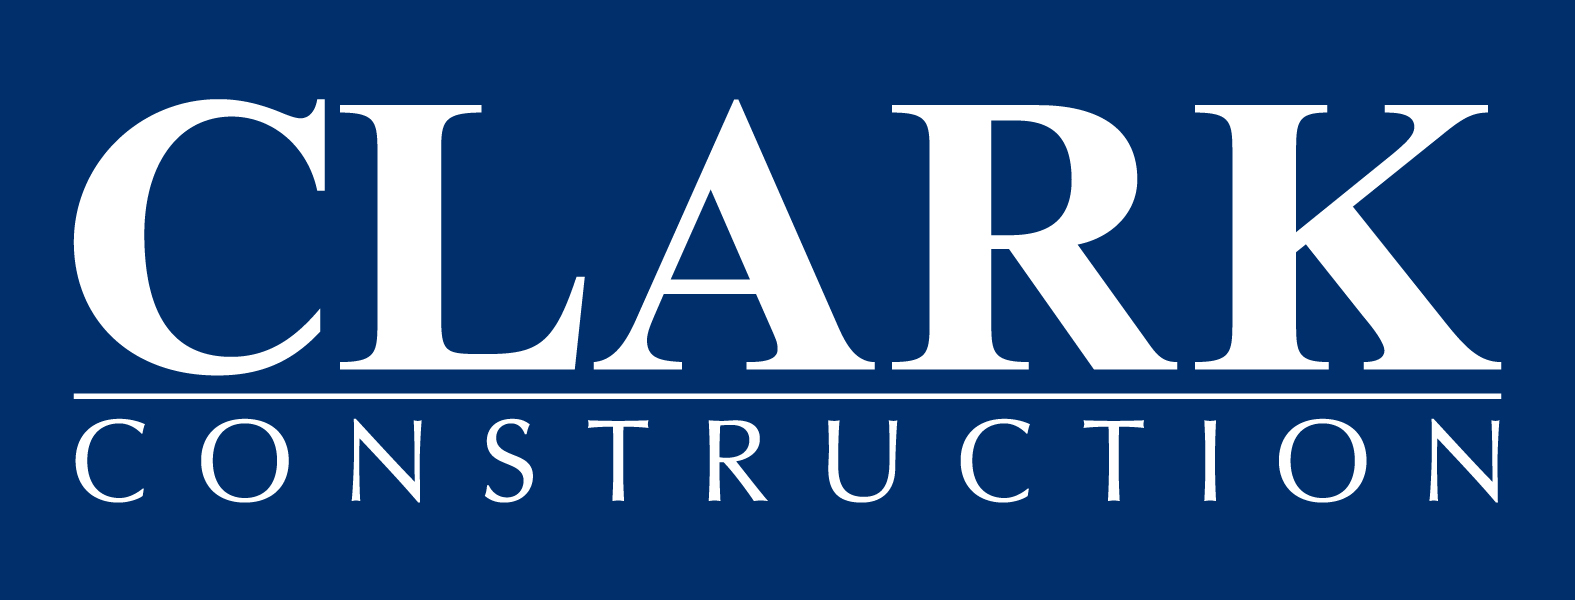 Clark Construction Logo - Screen - RGB